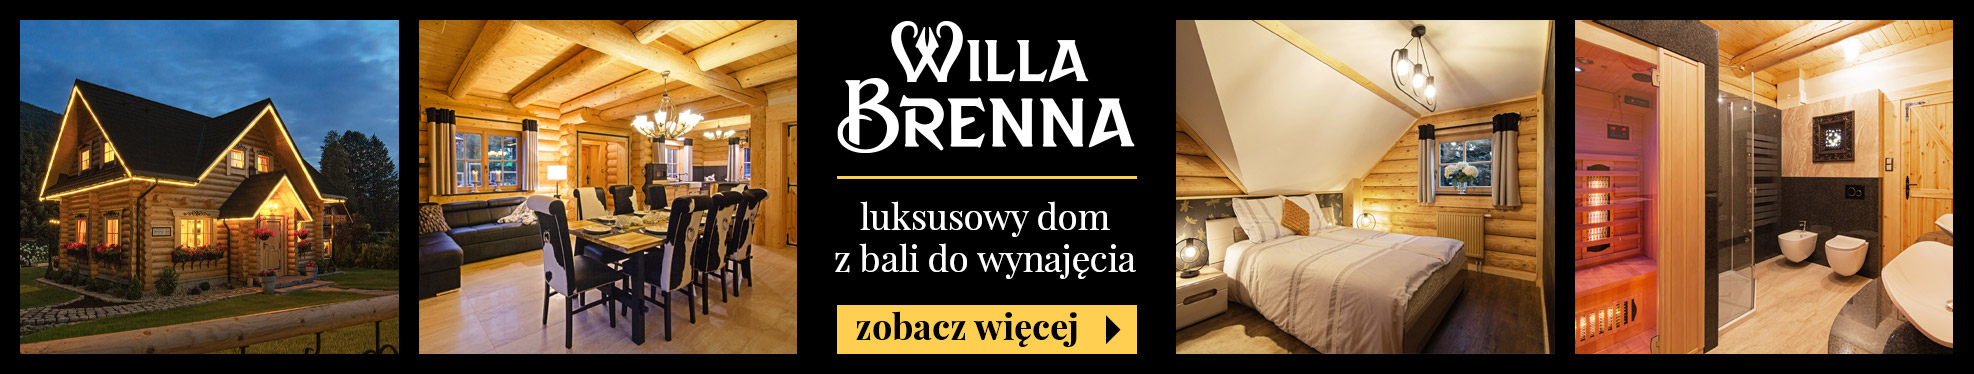 Willa Brenna